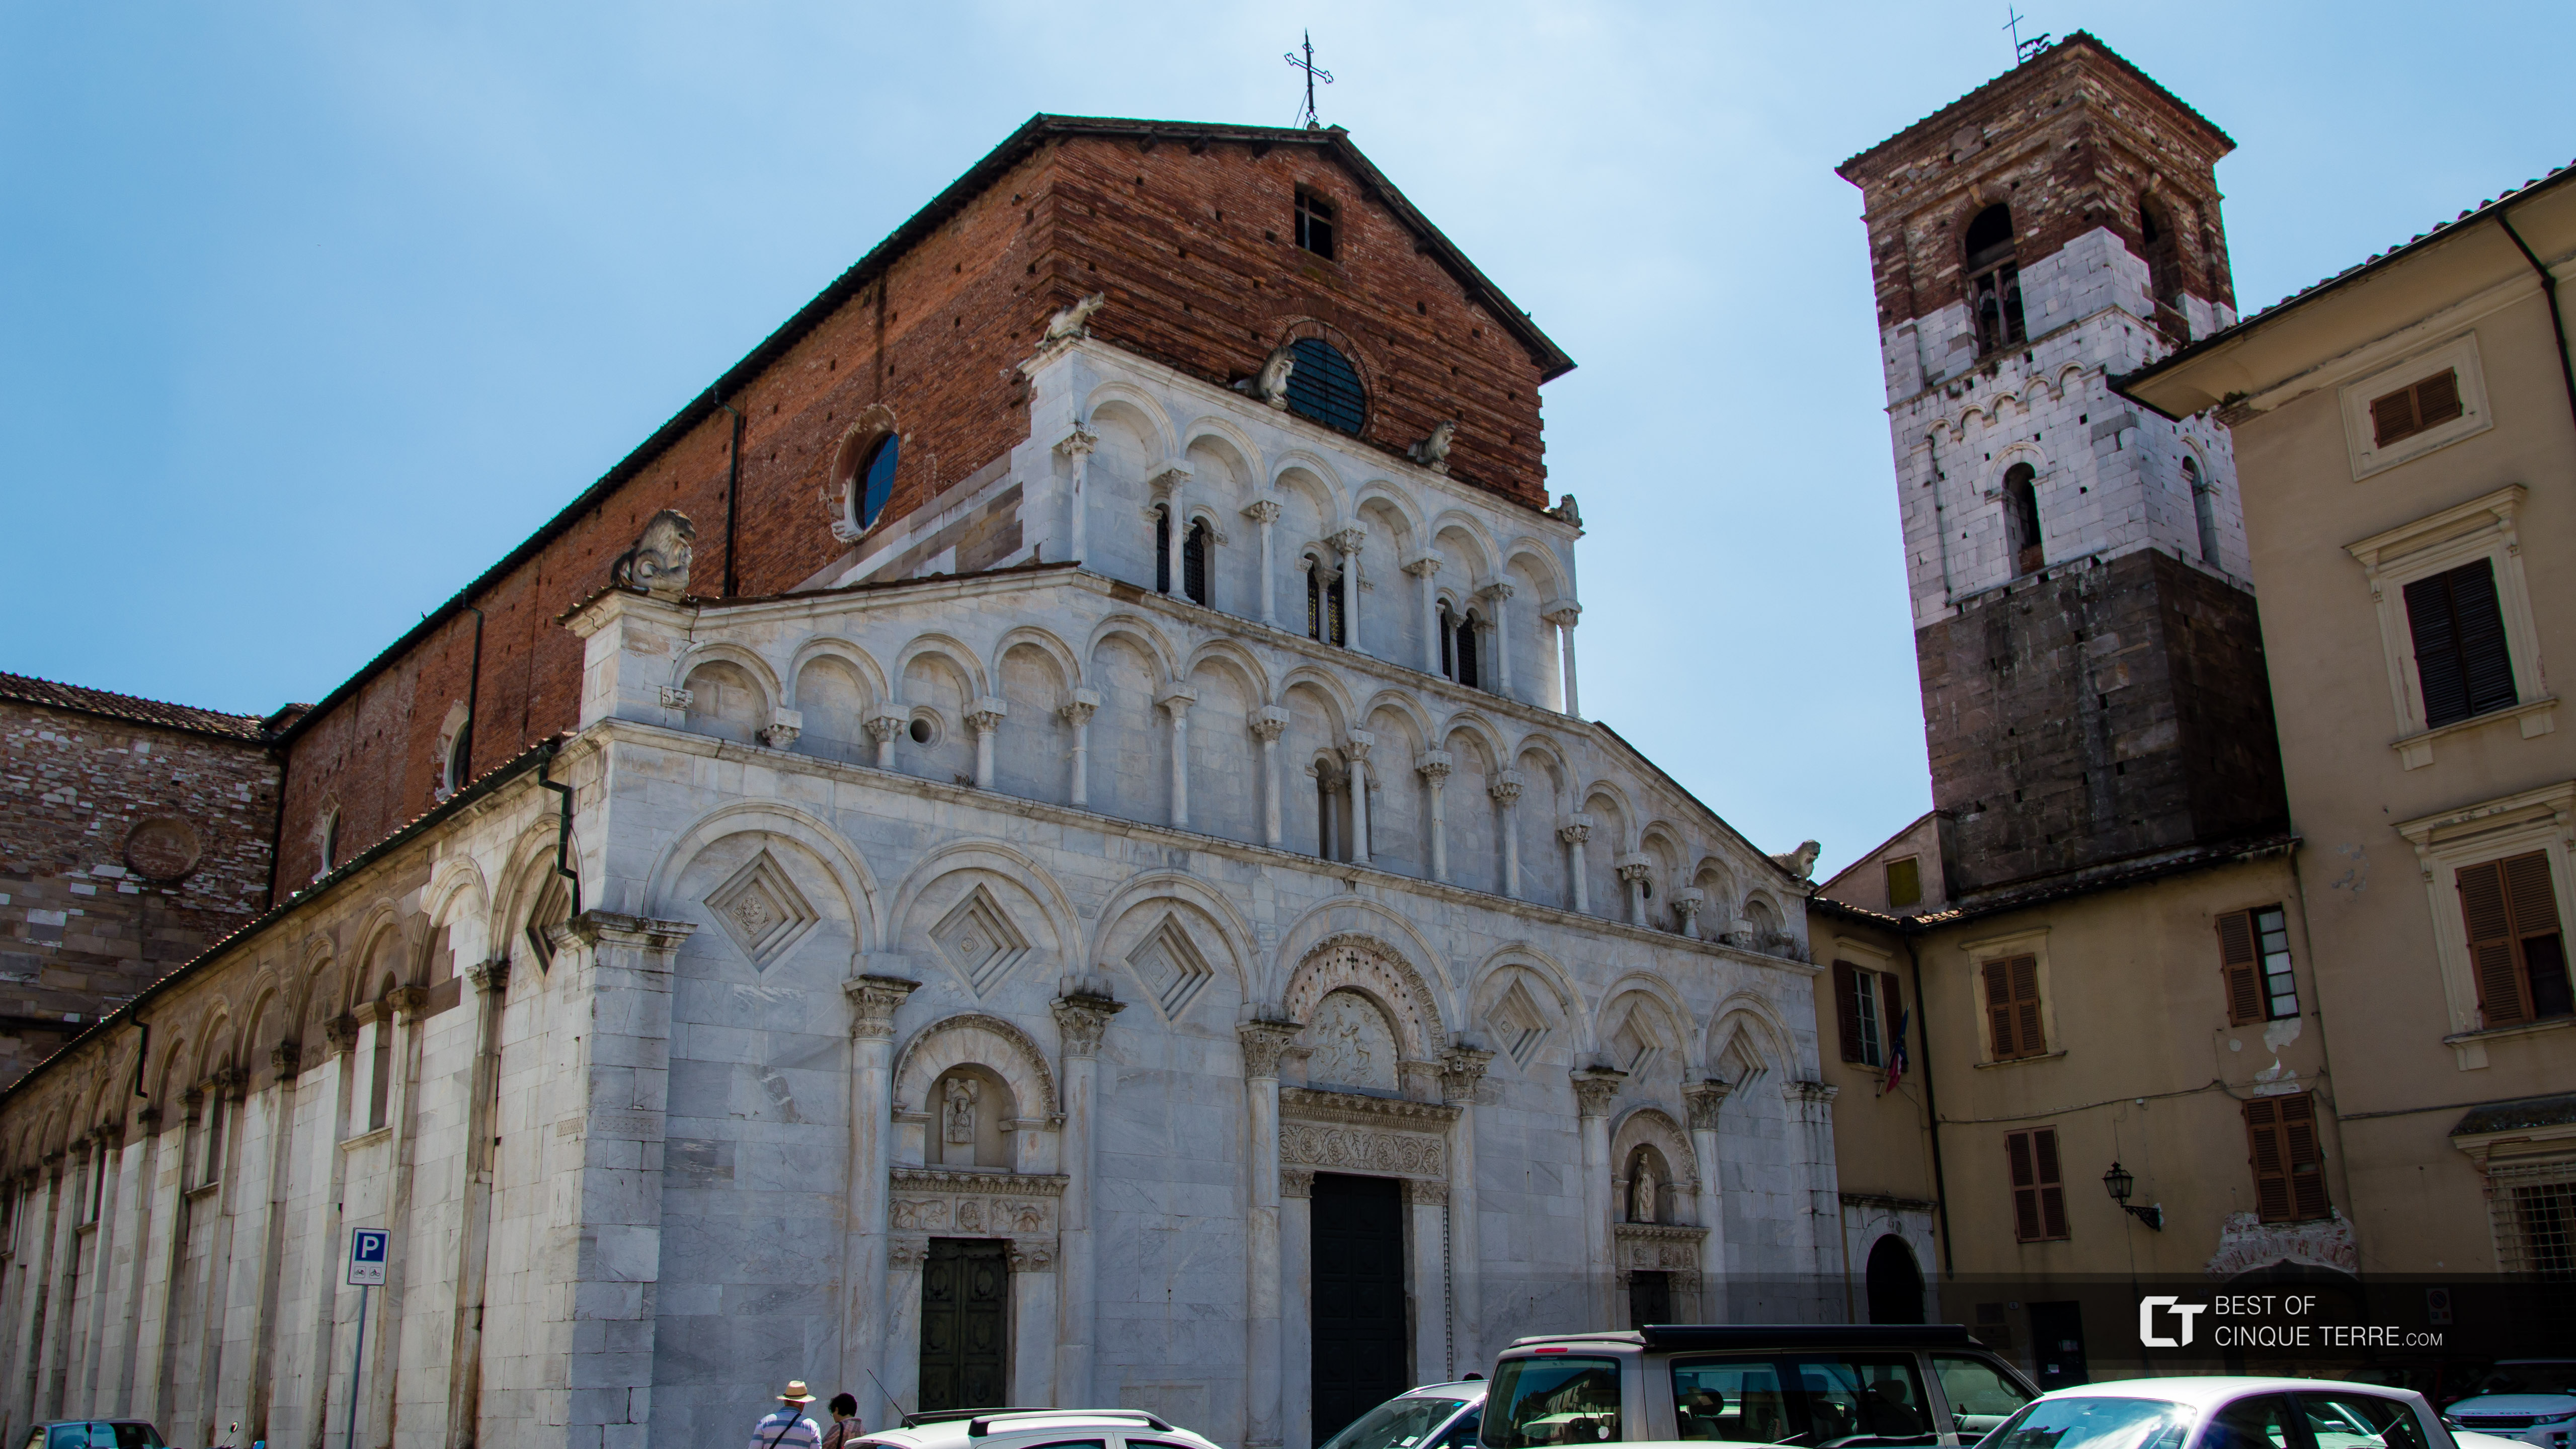 Igreja de Santa Maria Forisportam, Lucca, Itália